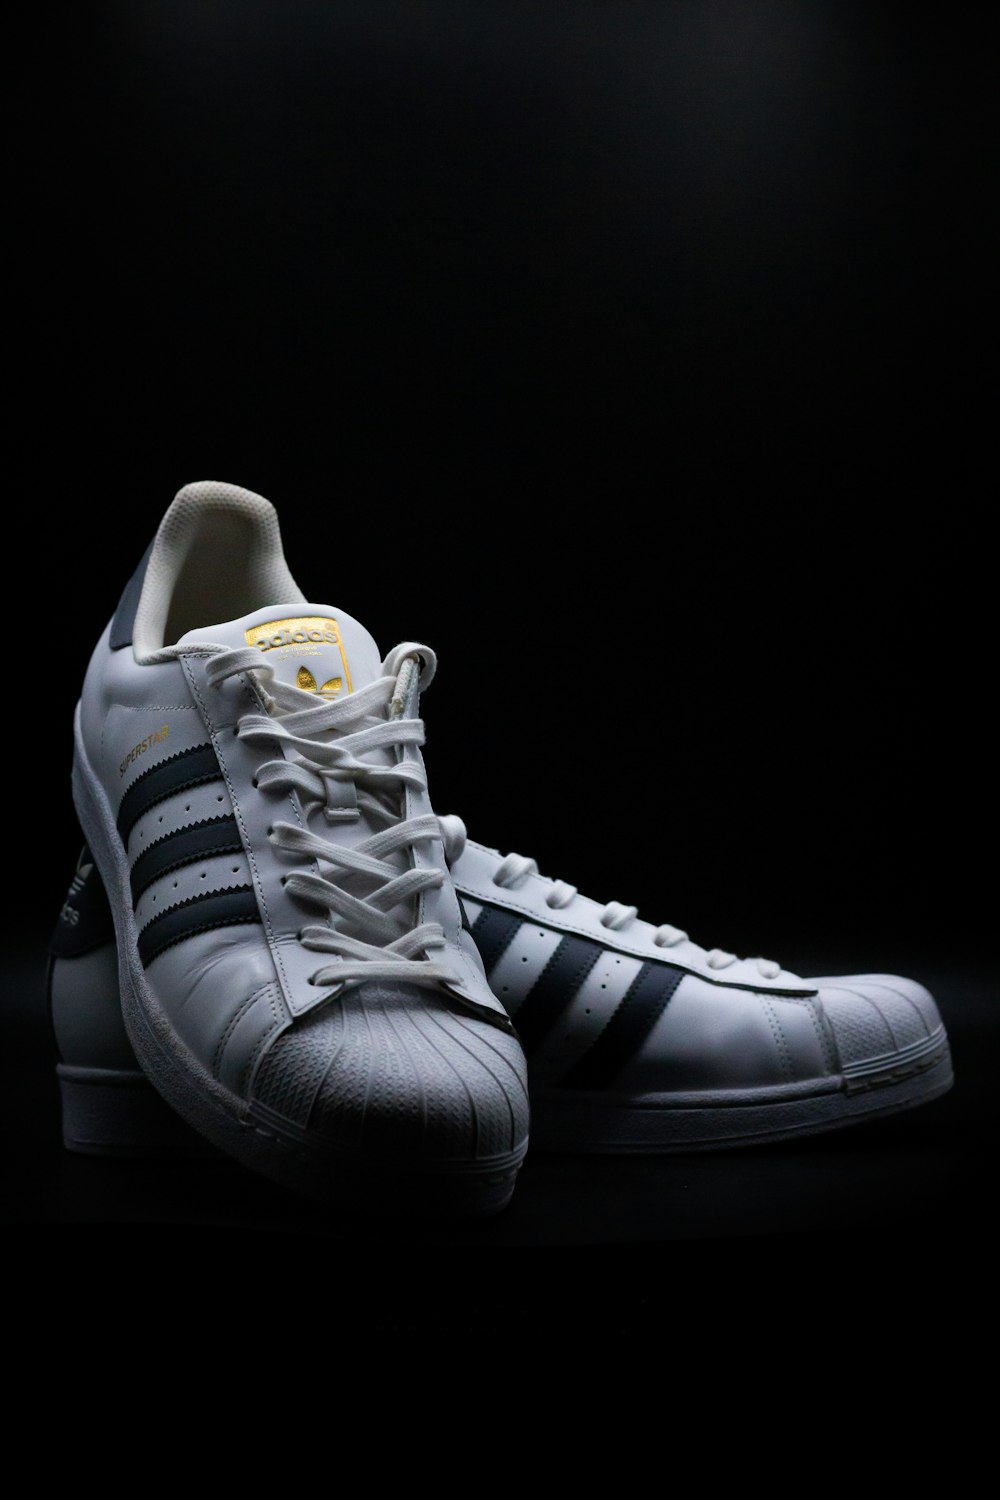 1K+ Adidas Shoe Pictures | Download Free Images on Unsplash